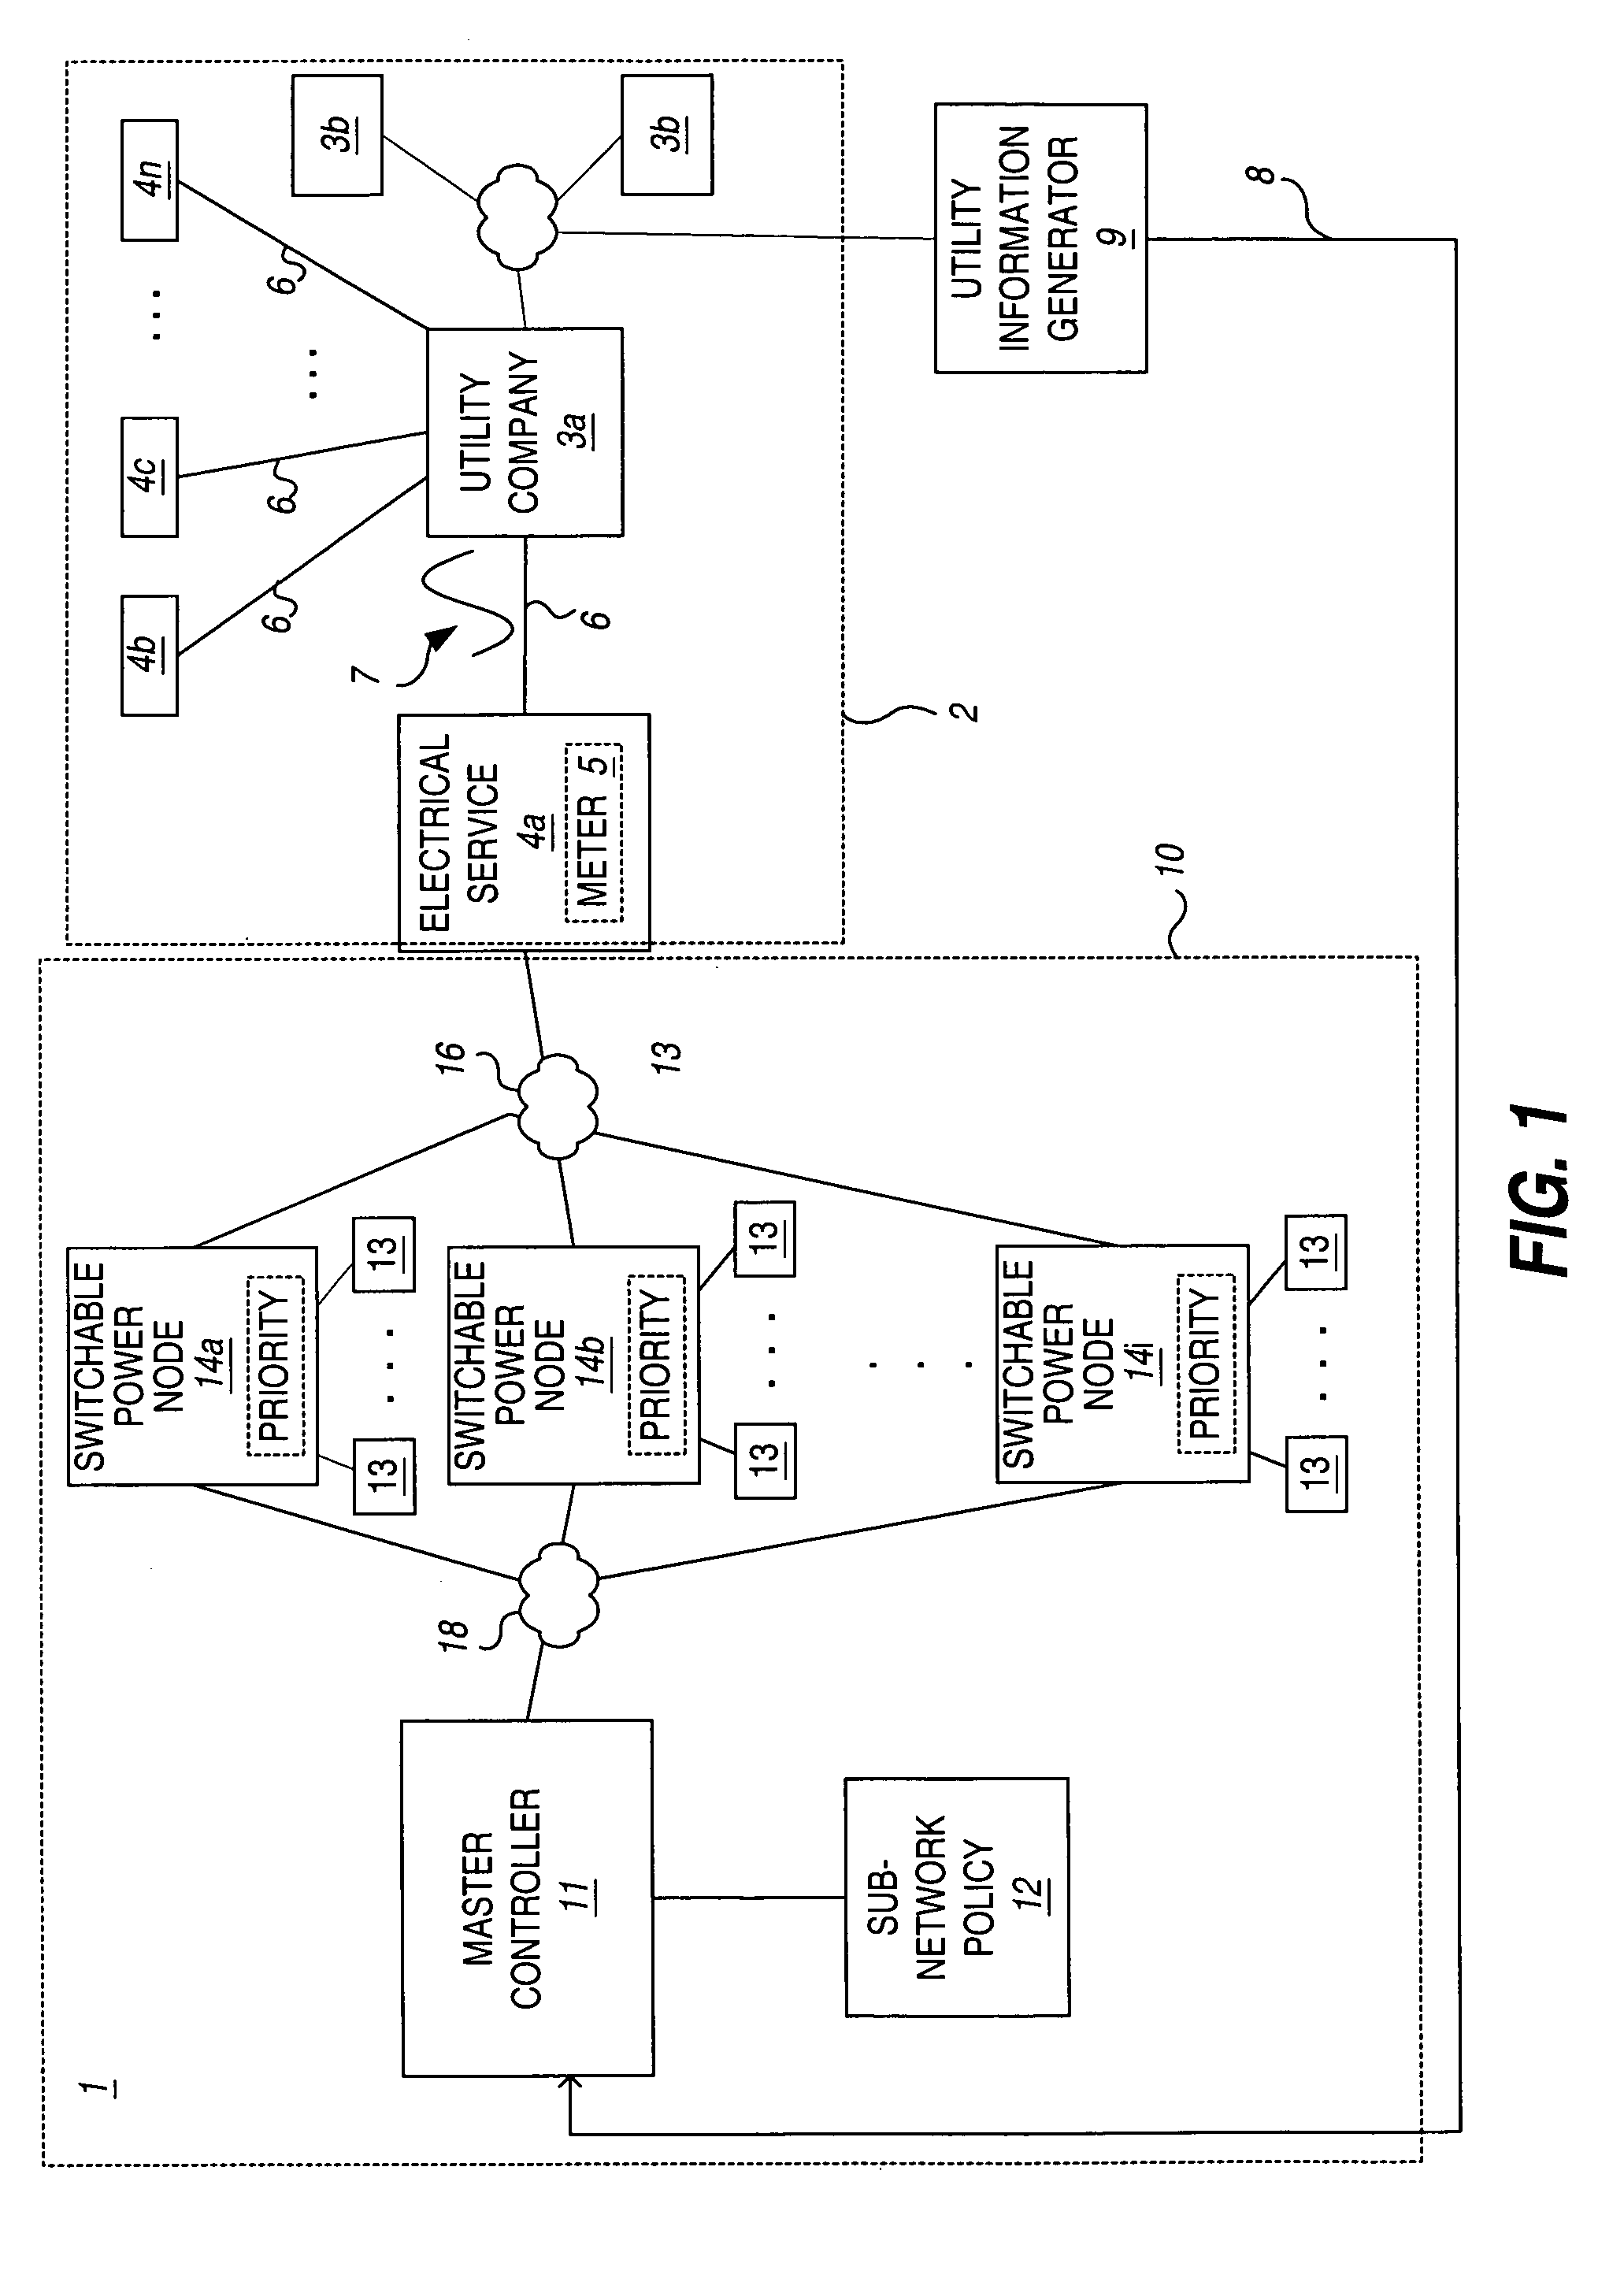 Dynamic control system for power sub-network